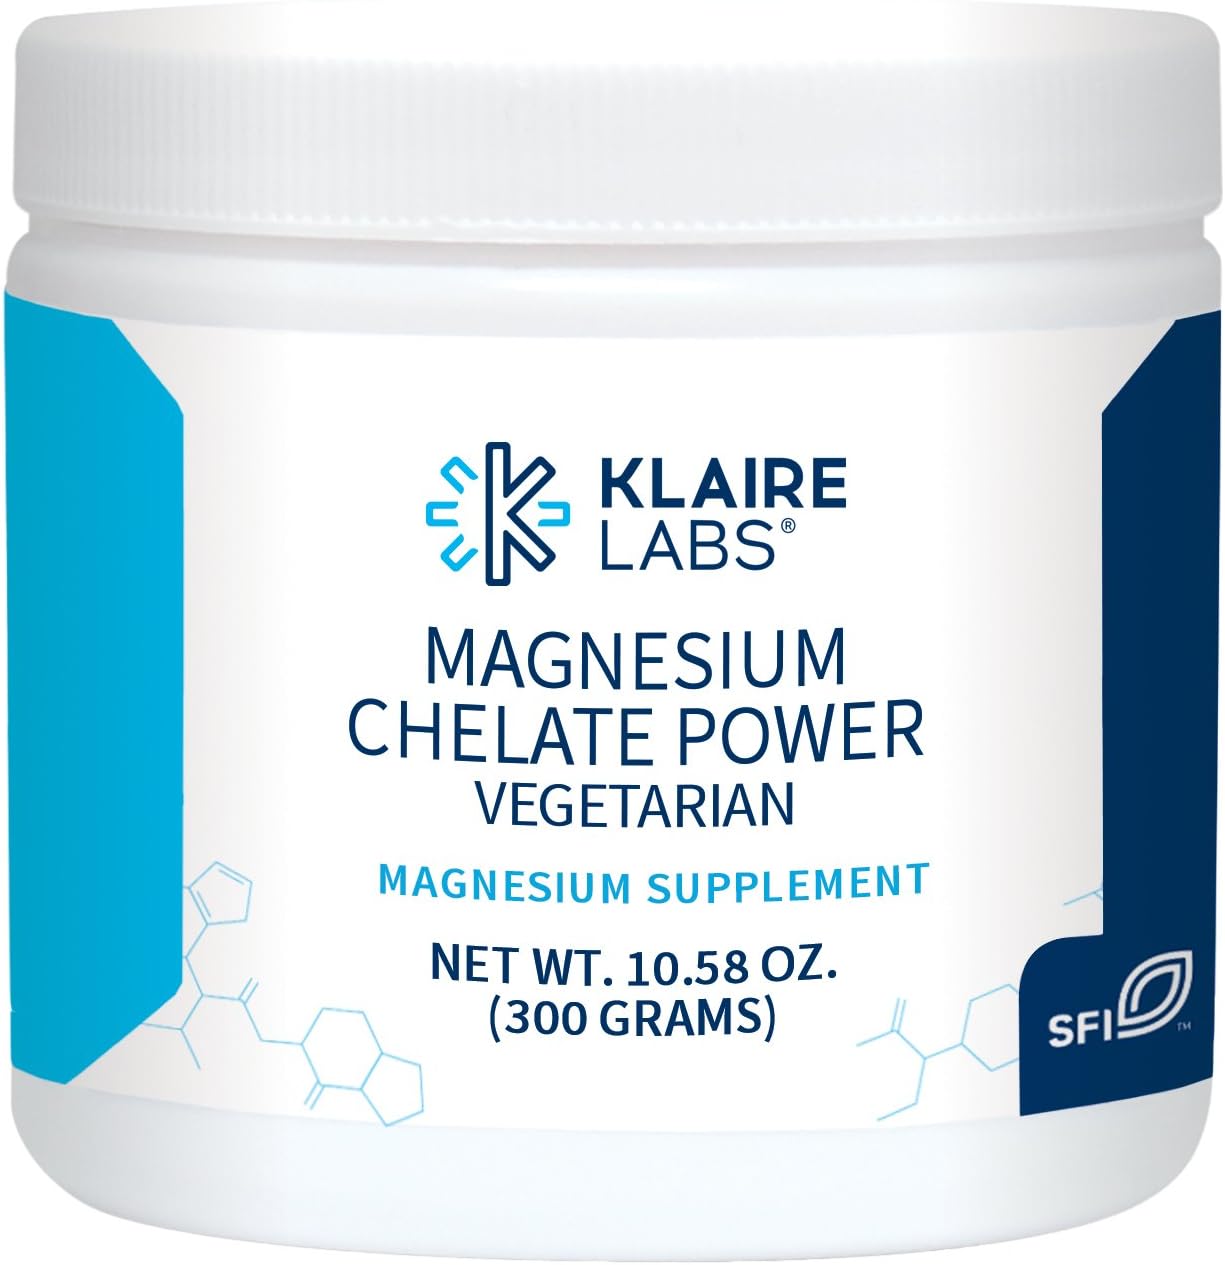 Klaire Labs Magnesium Chelate Powder